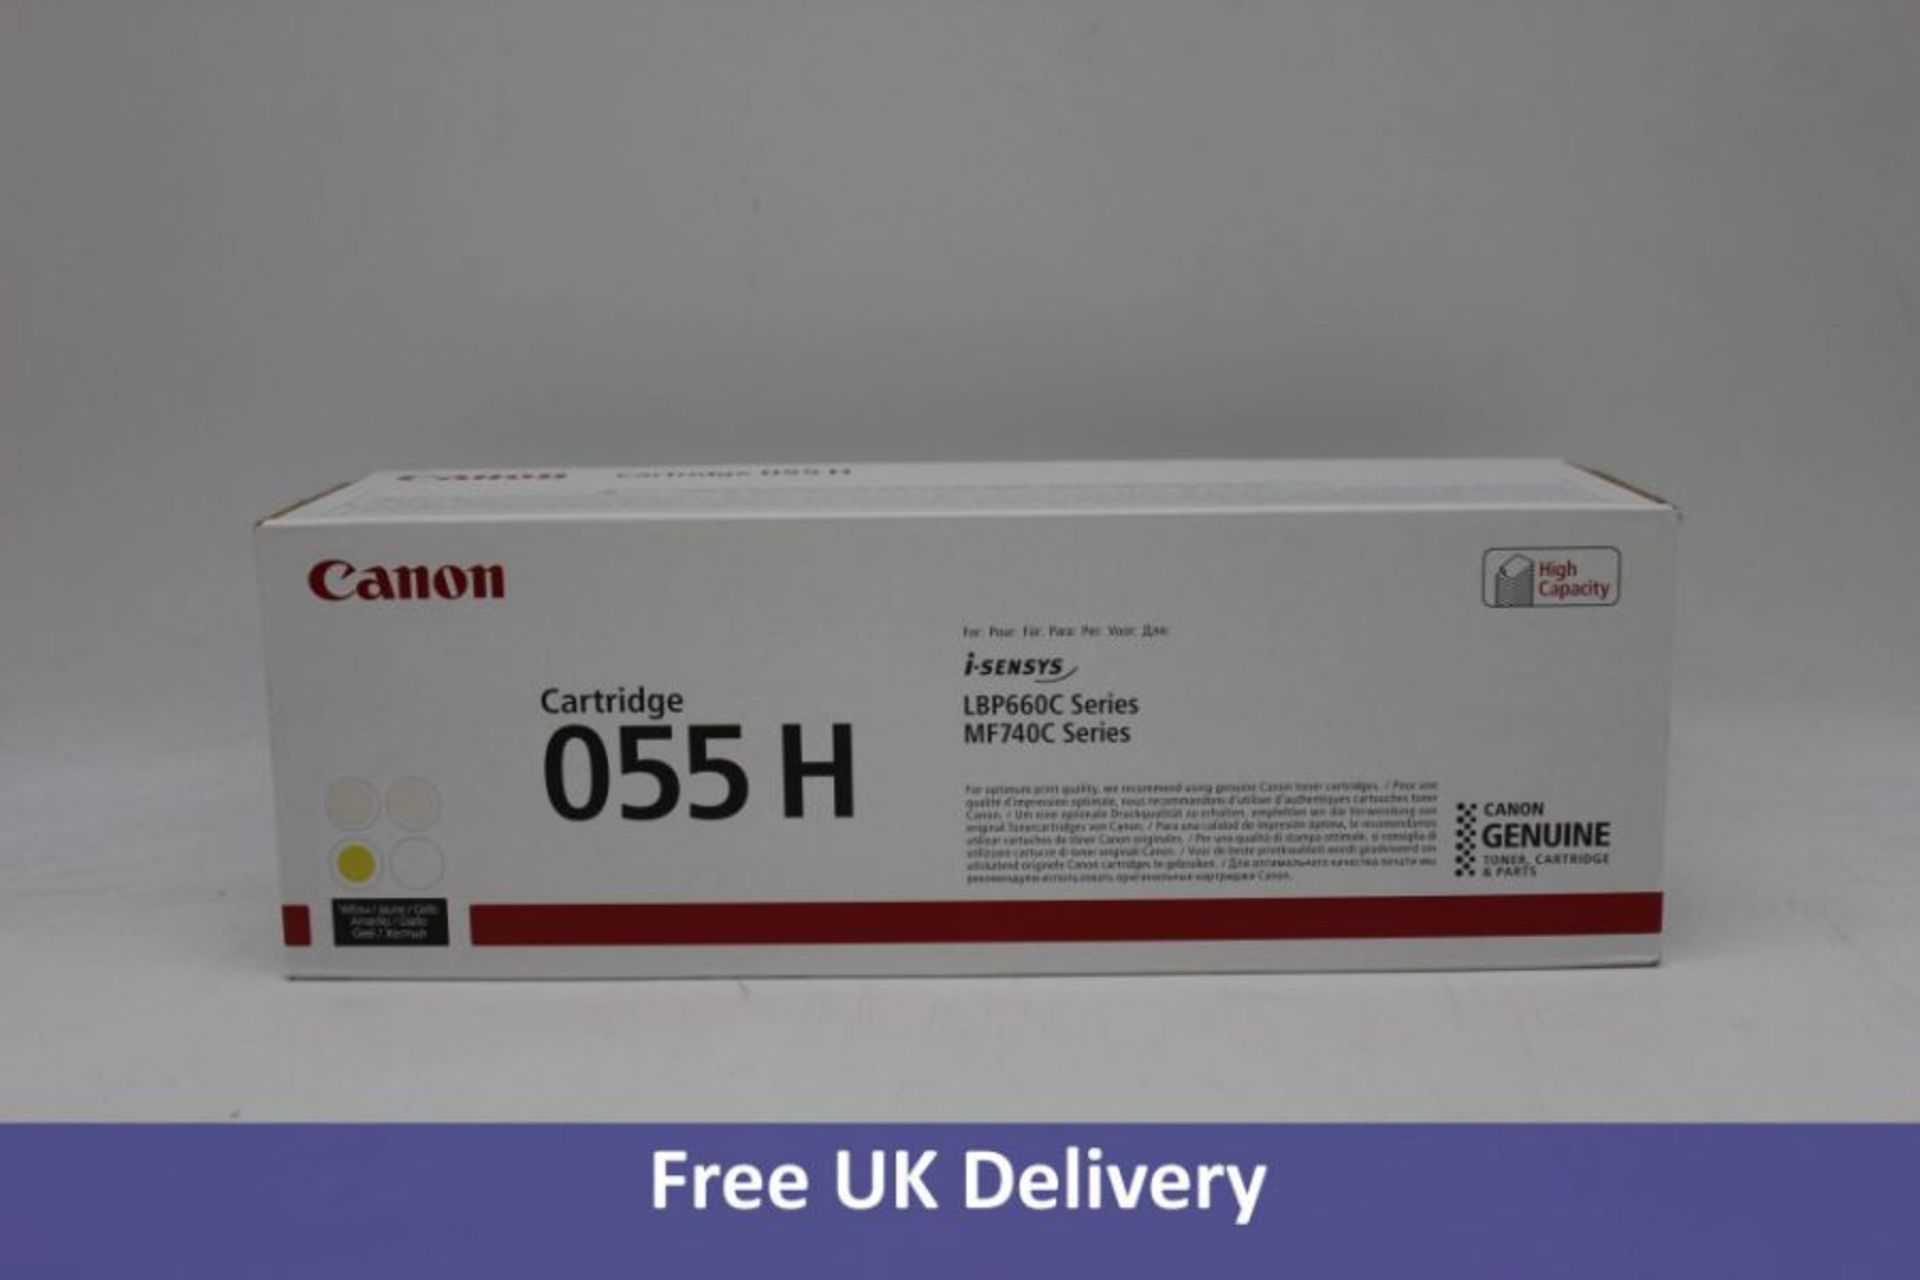 Three Canon Printer Cartridge 055 H, Yellow - Image 3 of 3